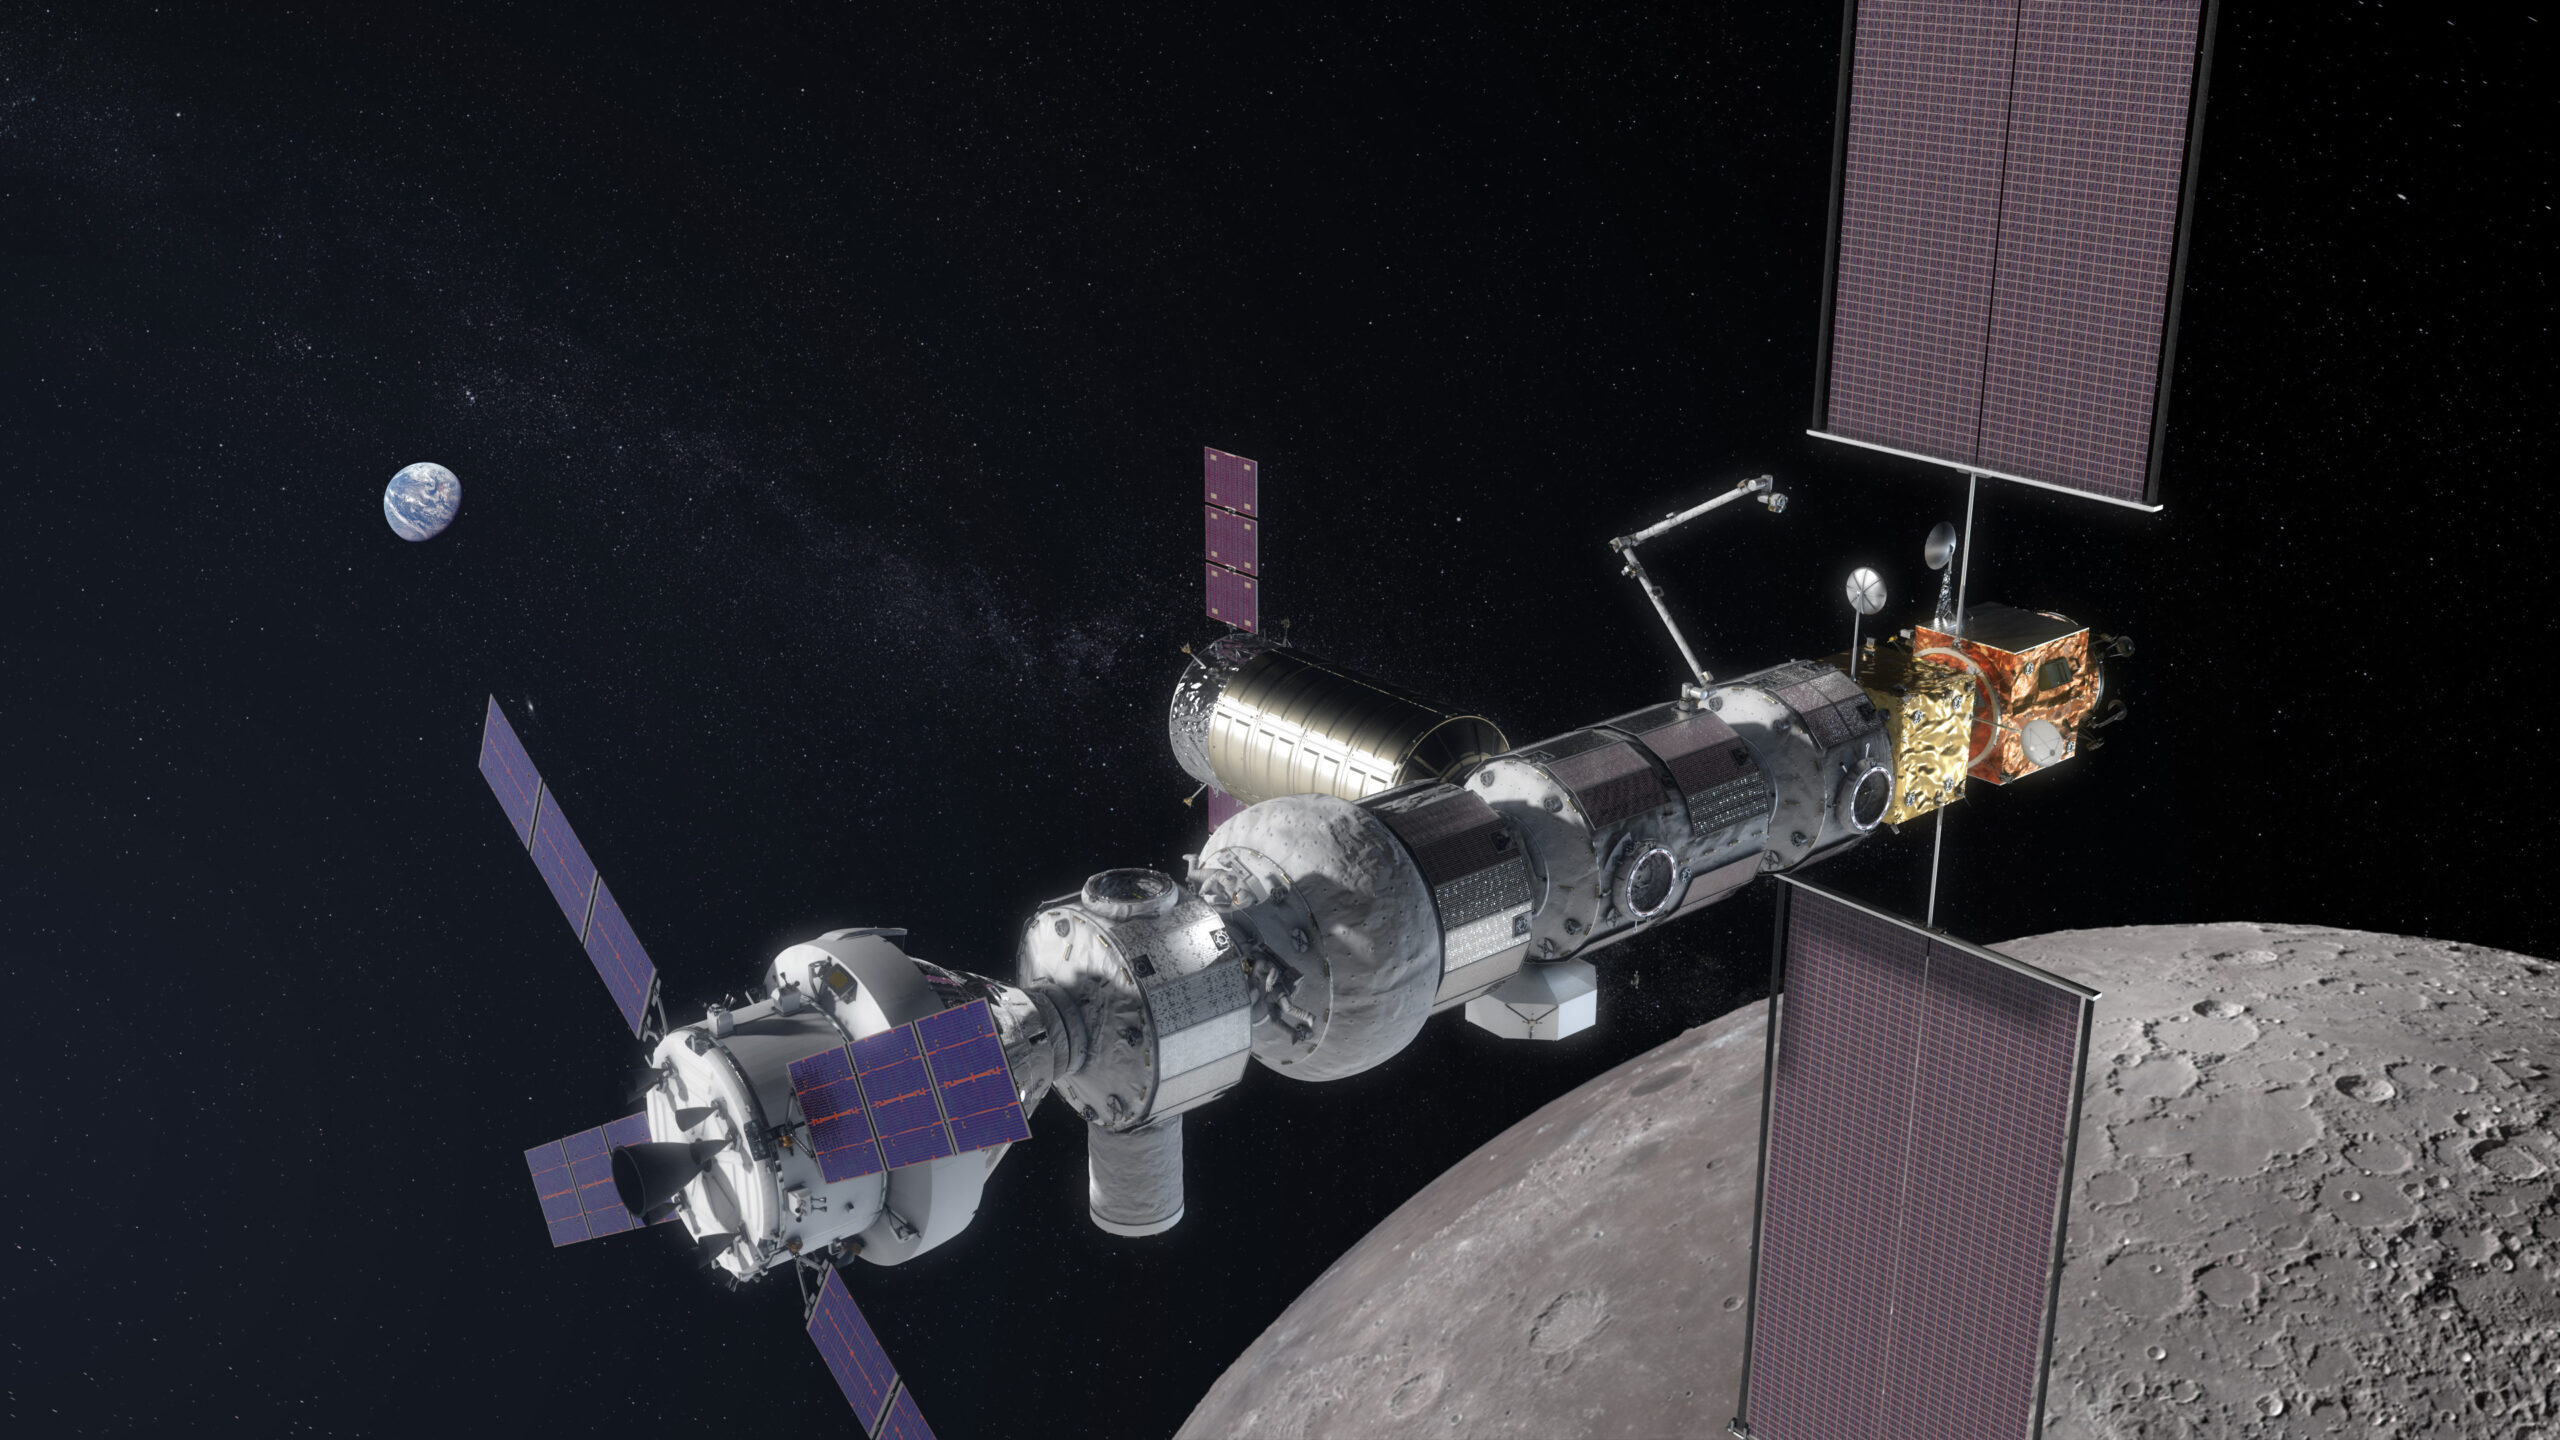 Lunar Orbital Platform-Gateway